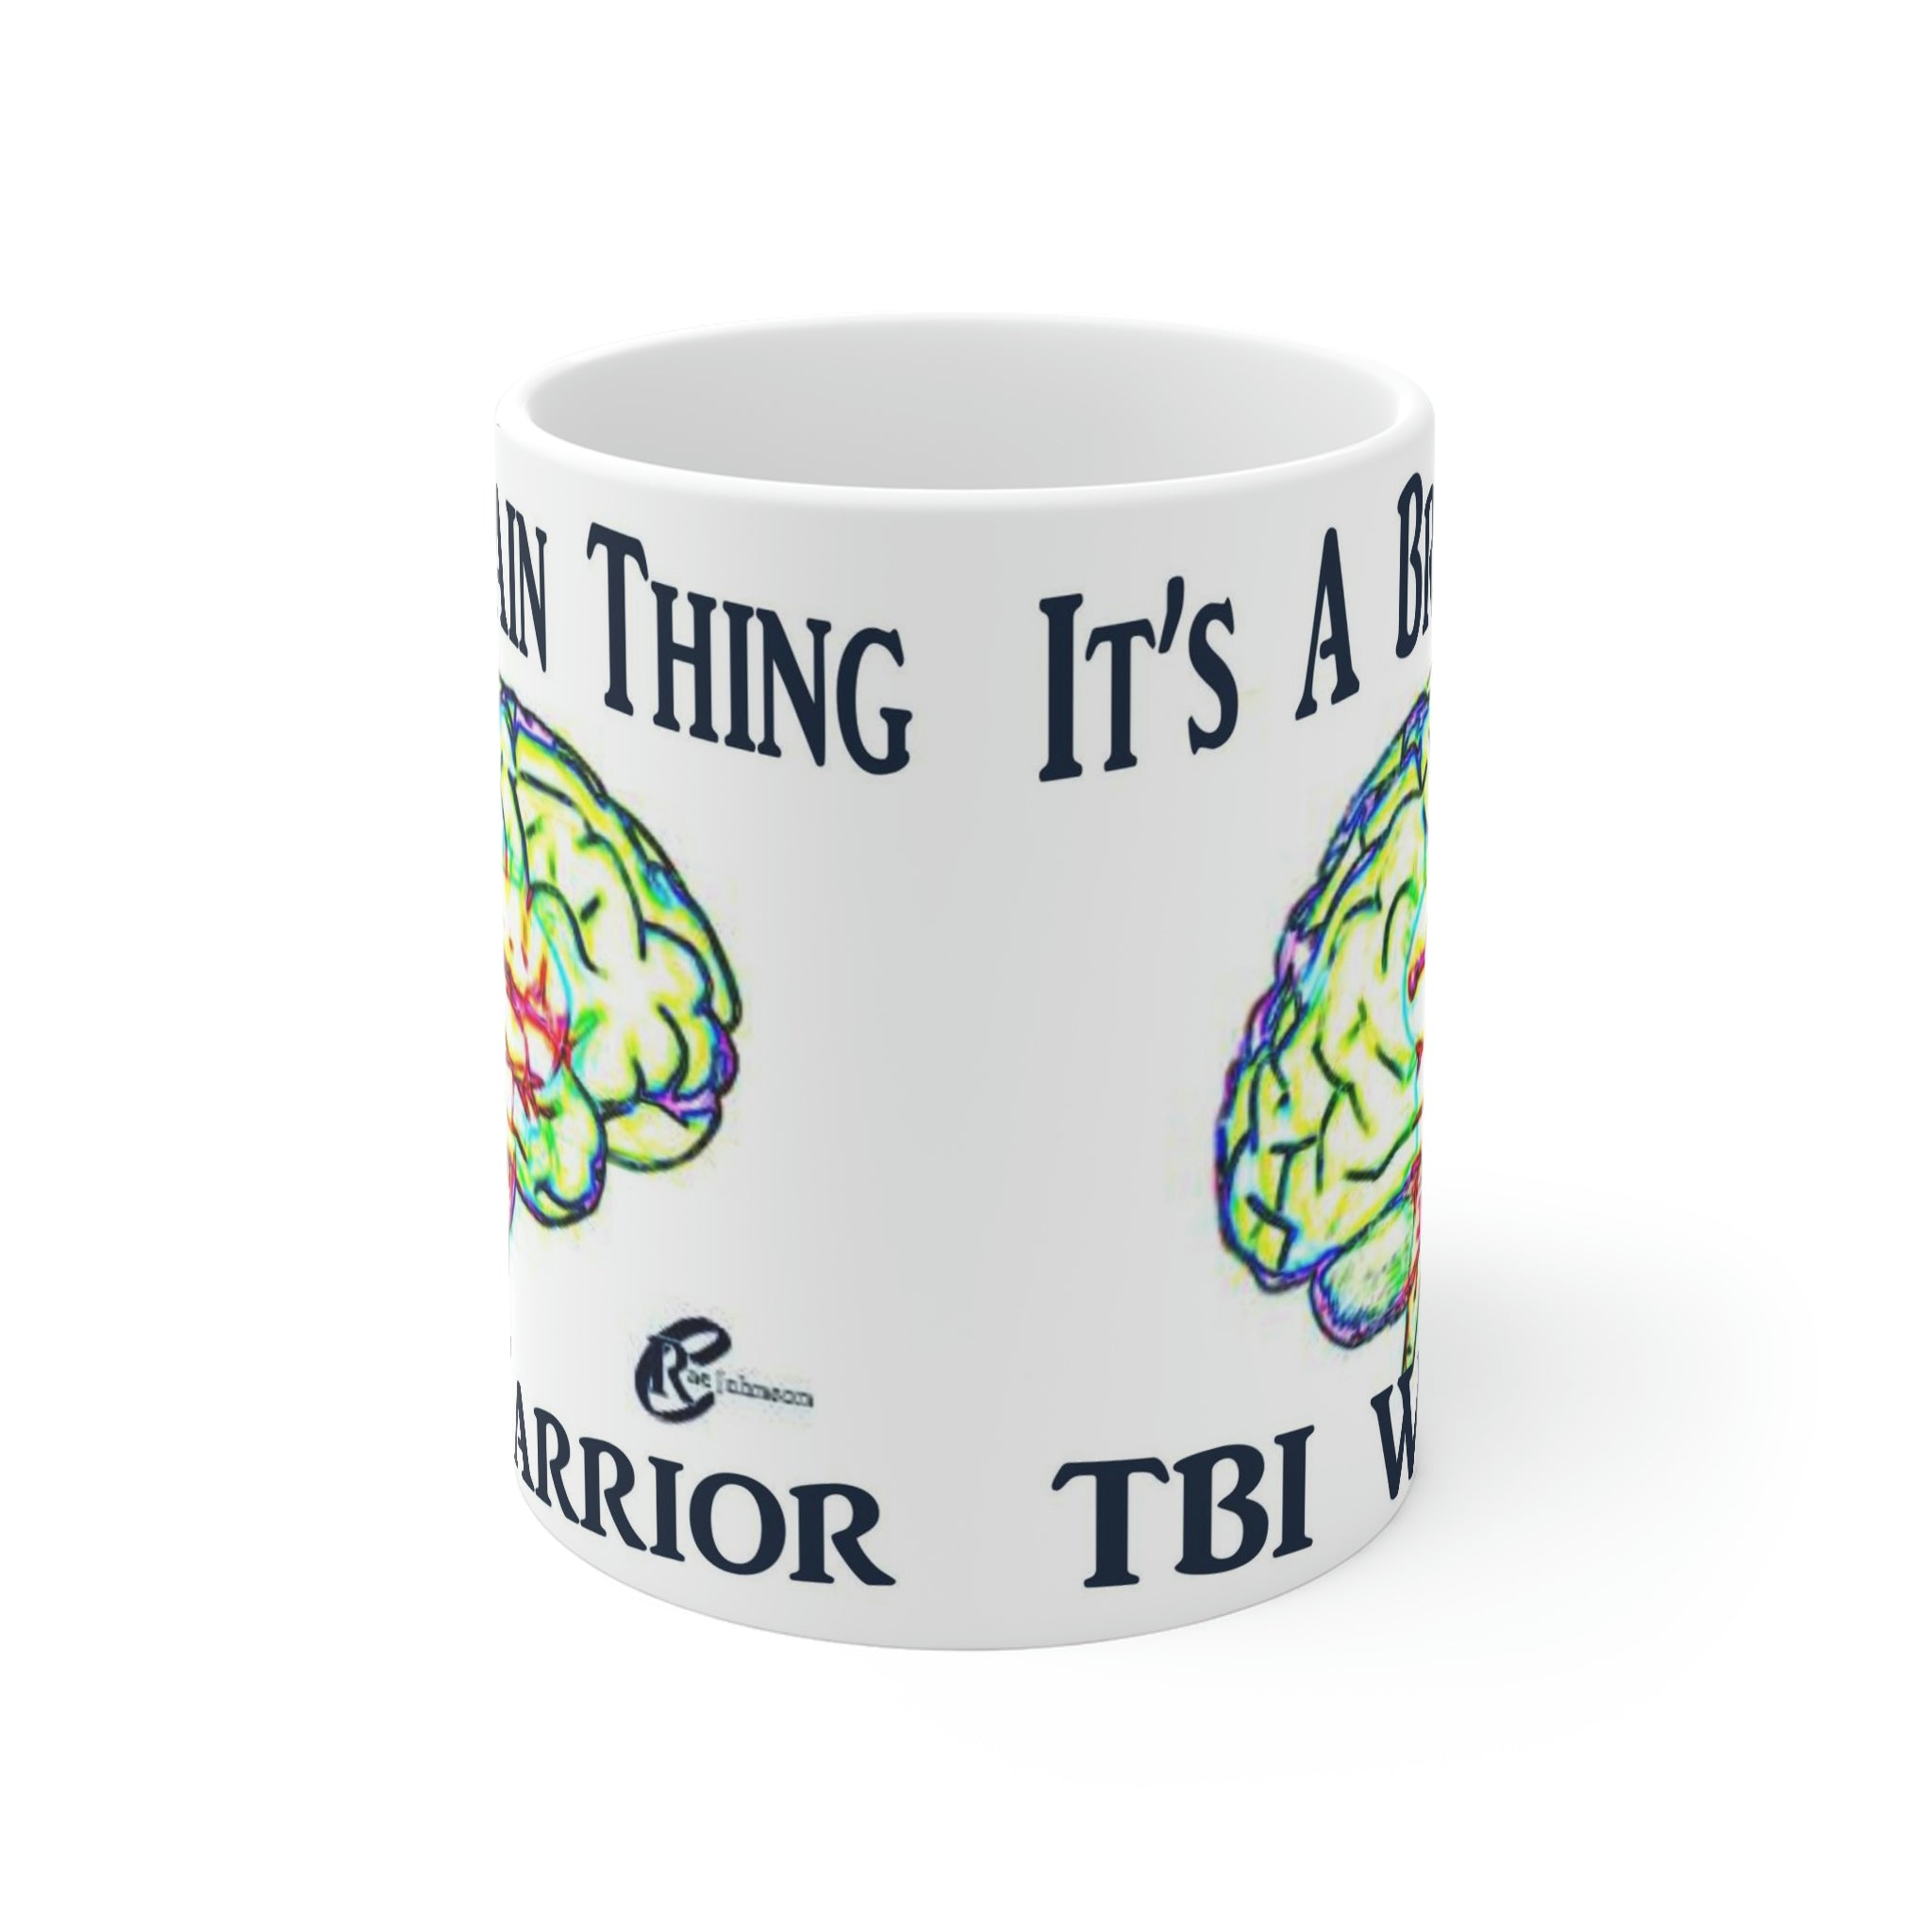 TBI Warrior Brain Bling "It's a Brain thing" Mug White 11oz